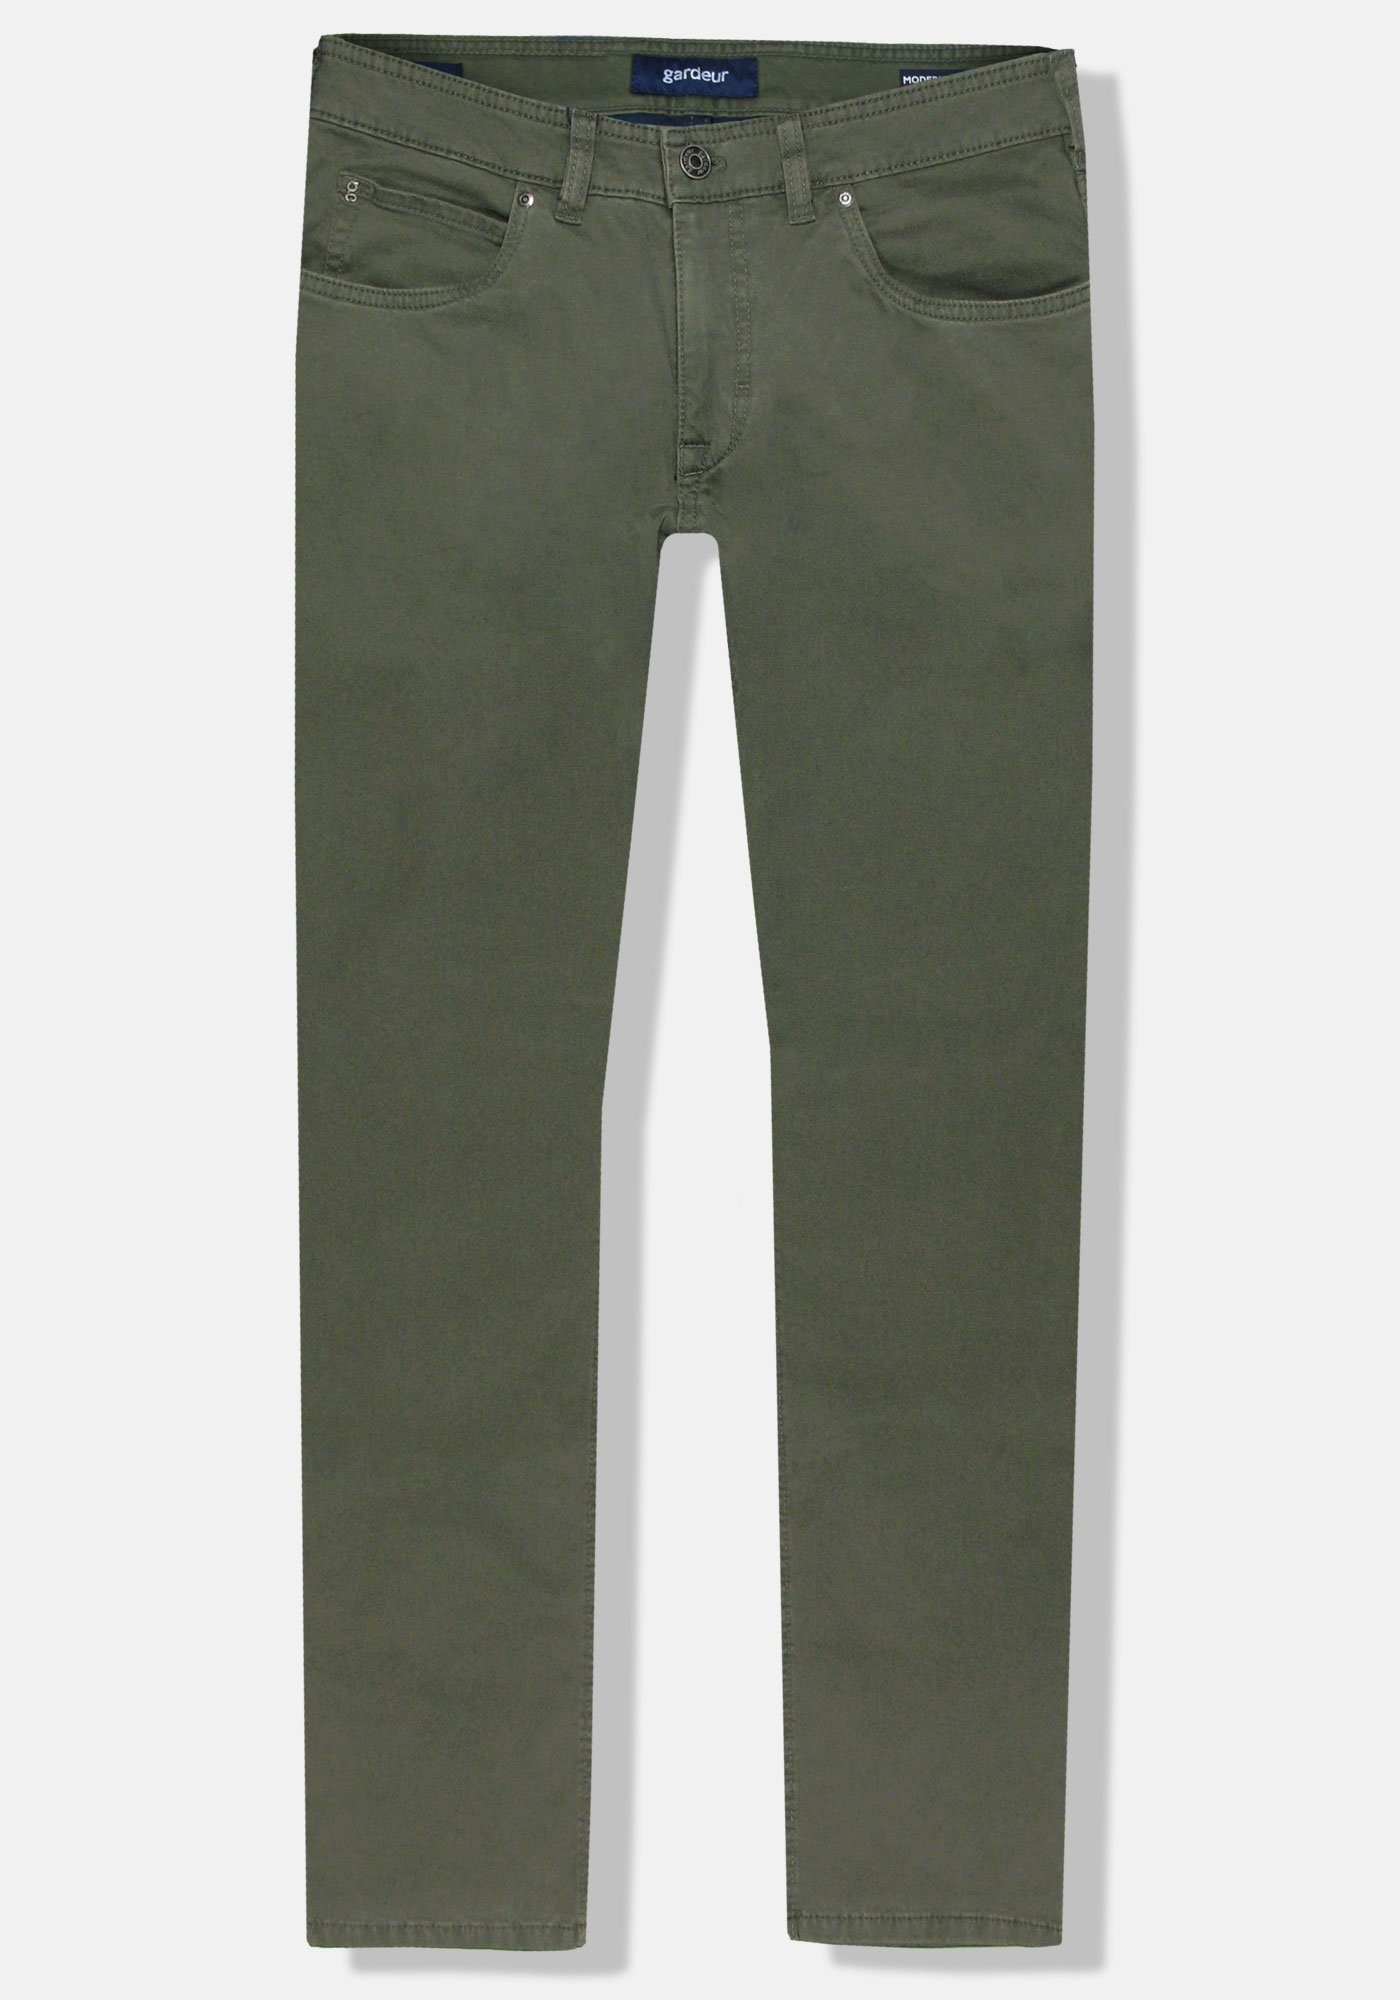 Cottonflex 5-Pocket-Jeans Atelier Baumwoll-Gabardine dusty Bill olive GARDEUR